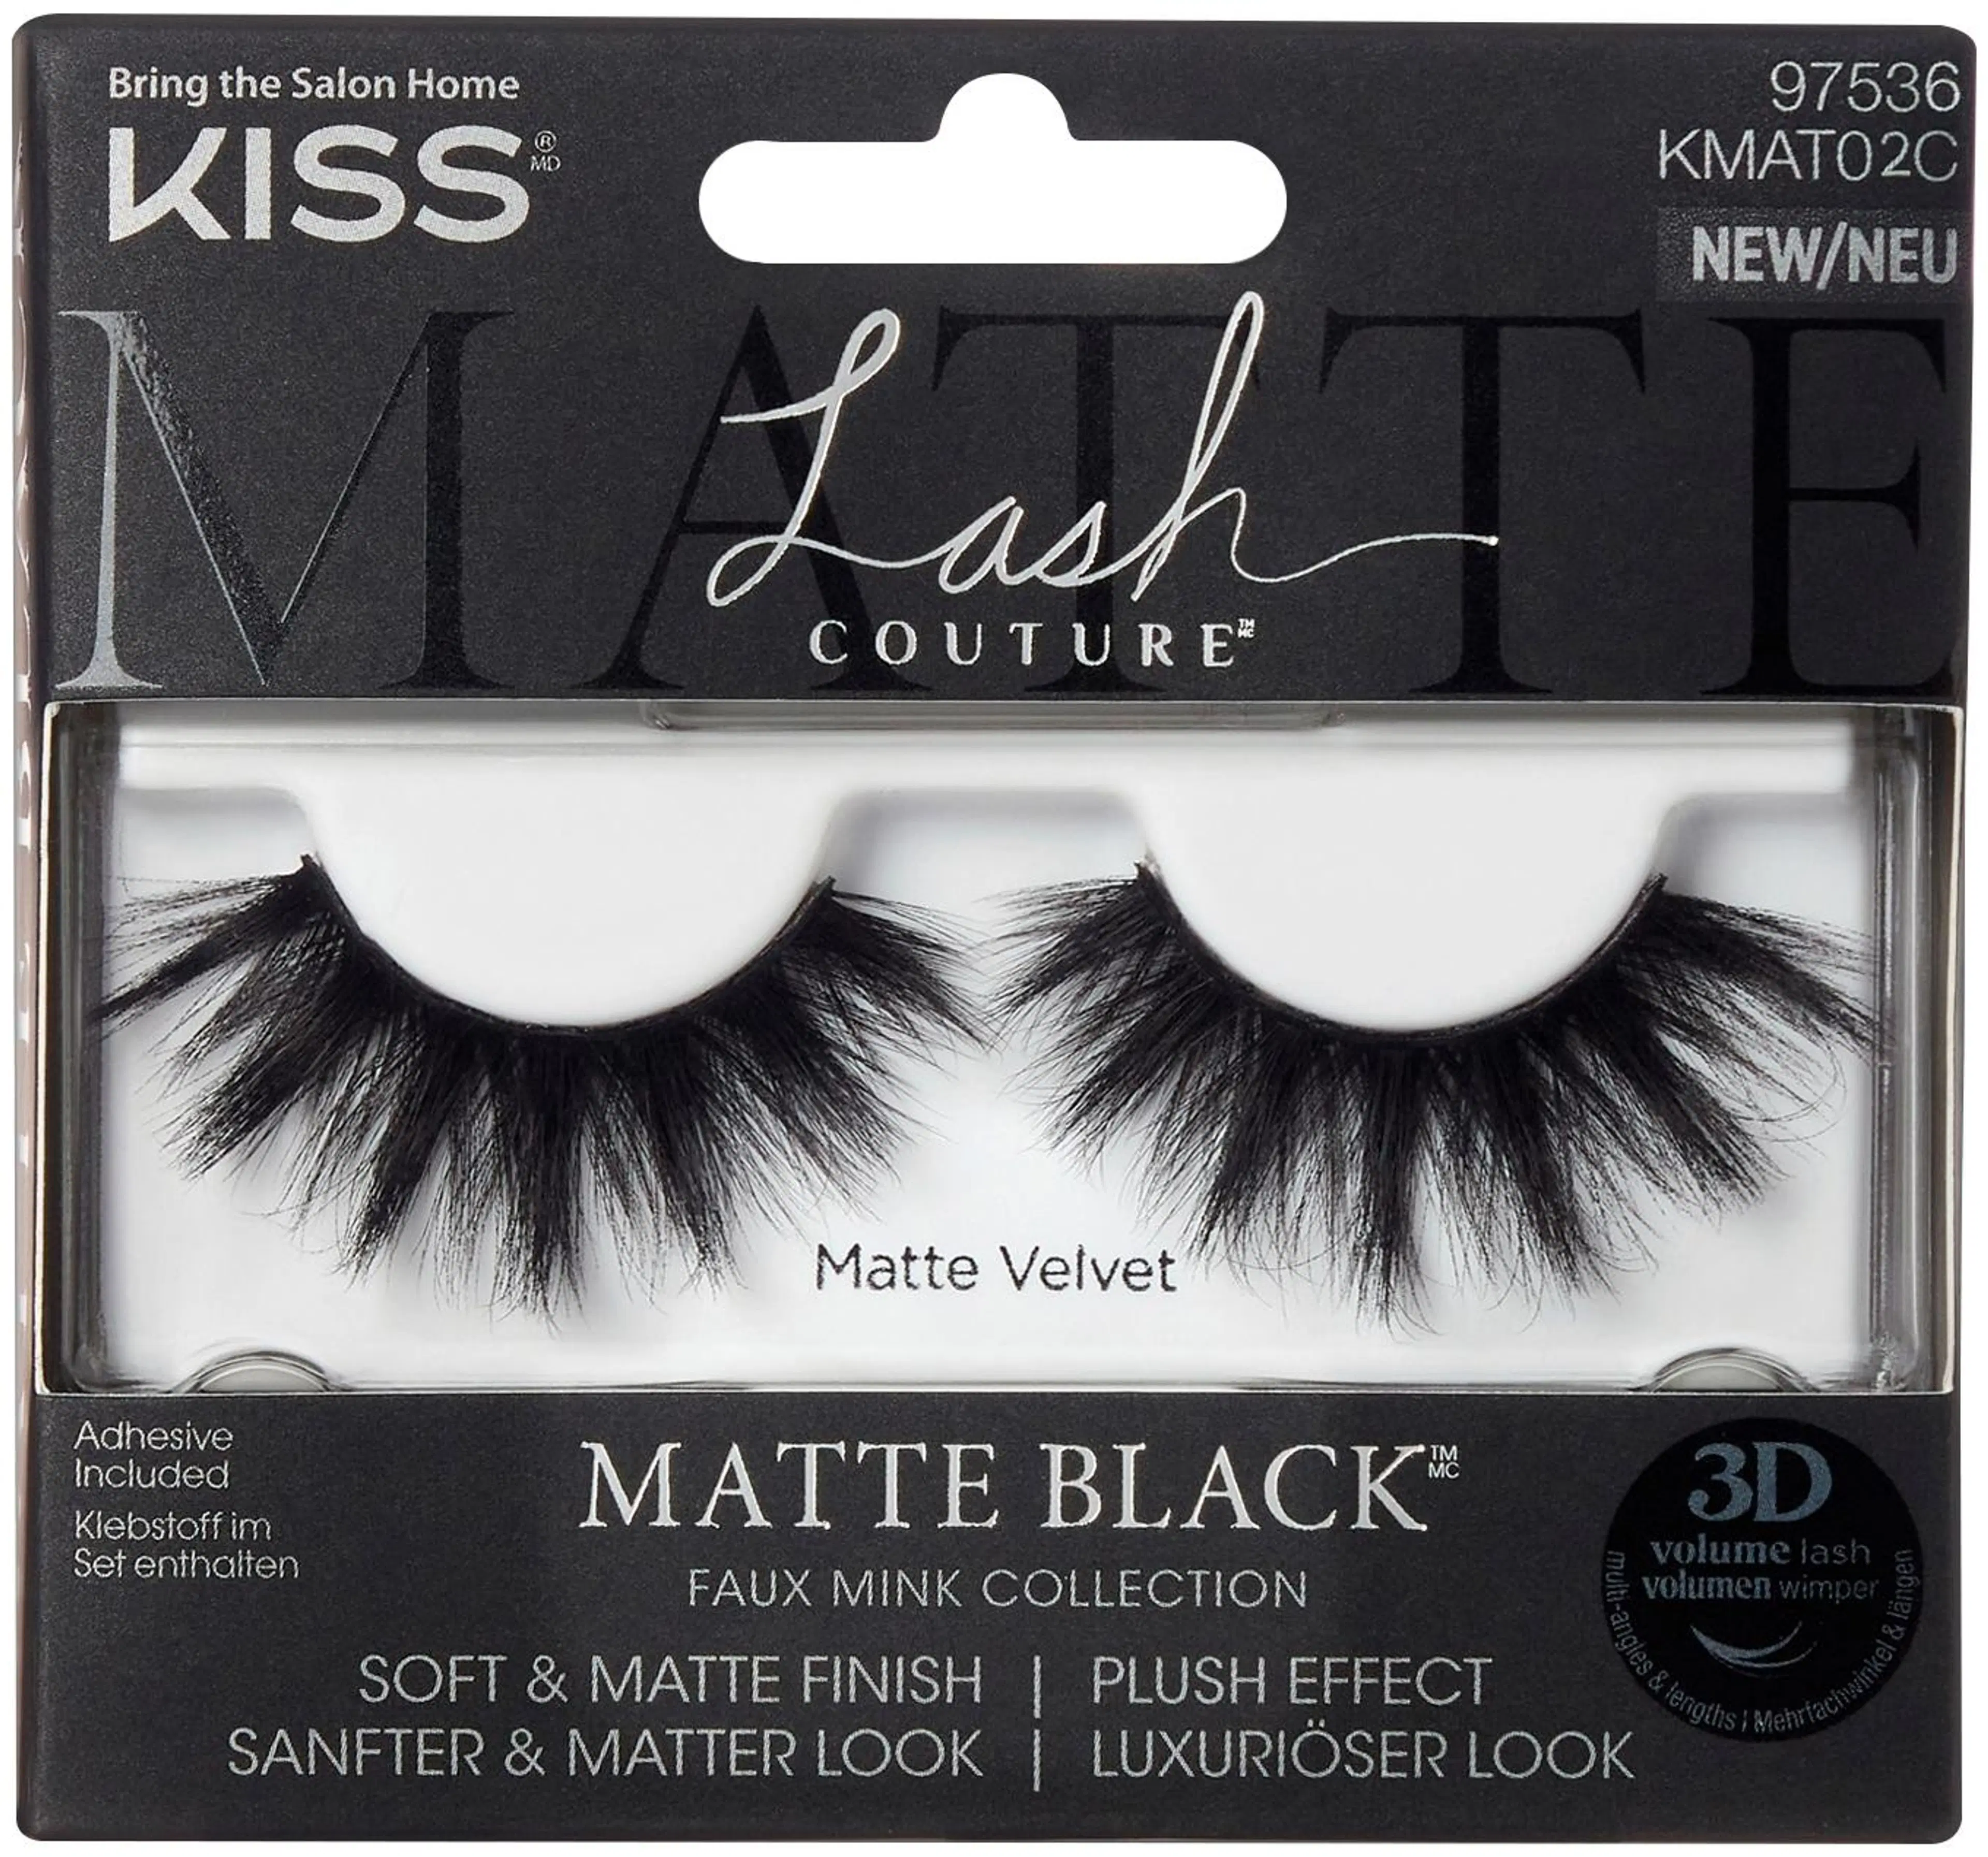 Kiss Lash Couture Matte Black lirtoripset, Velvet 1pari